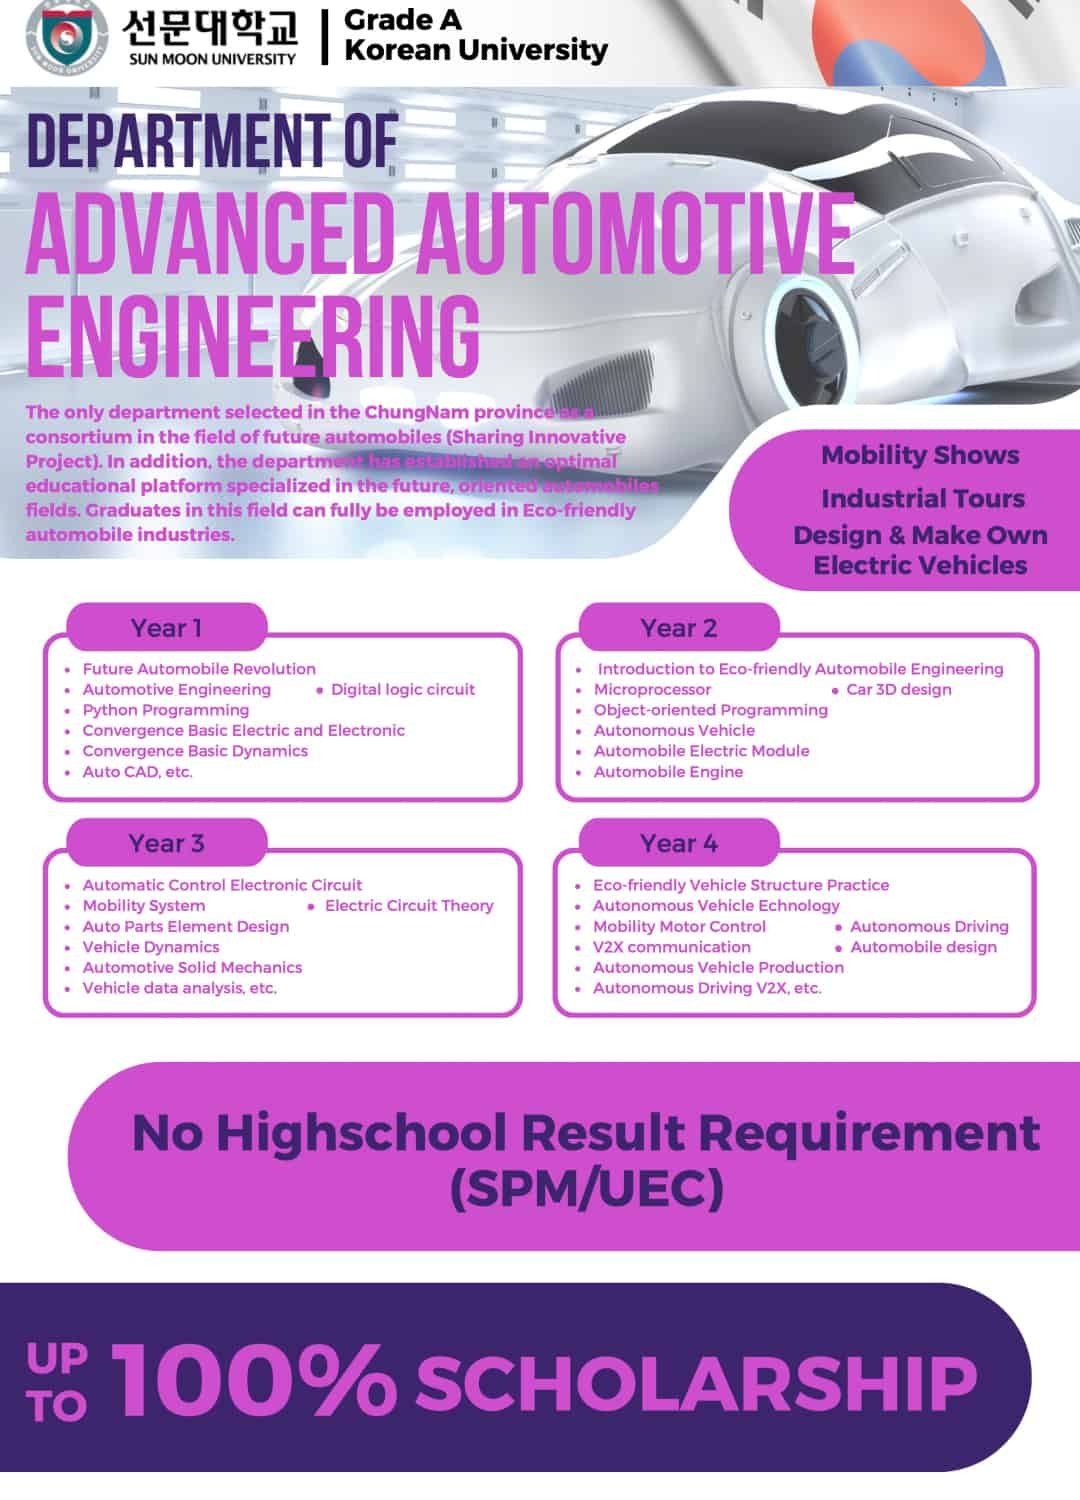  Advanced Automotive Engineering